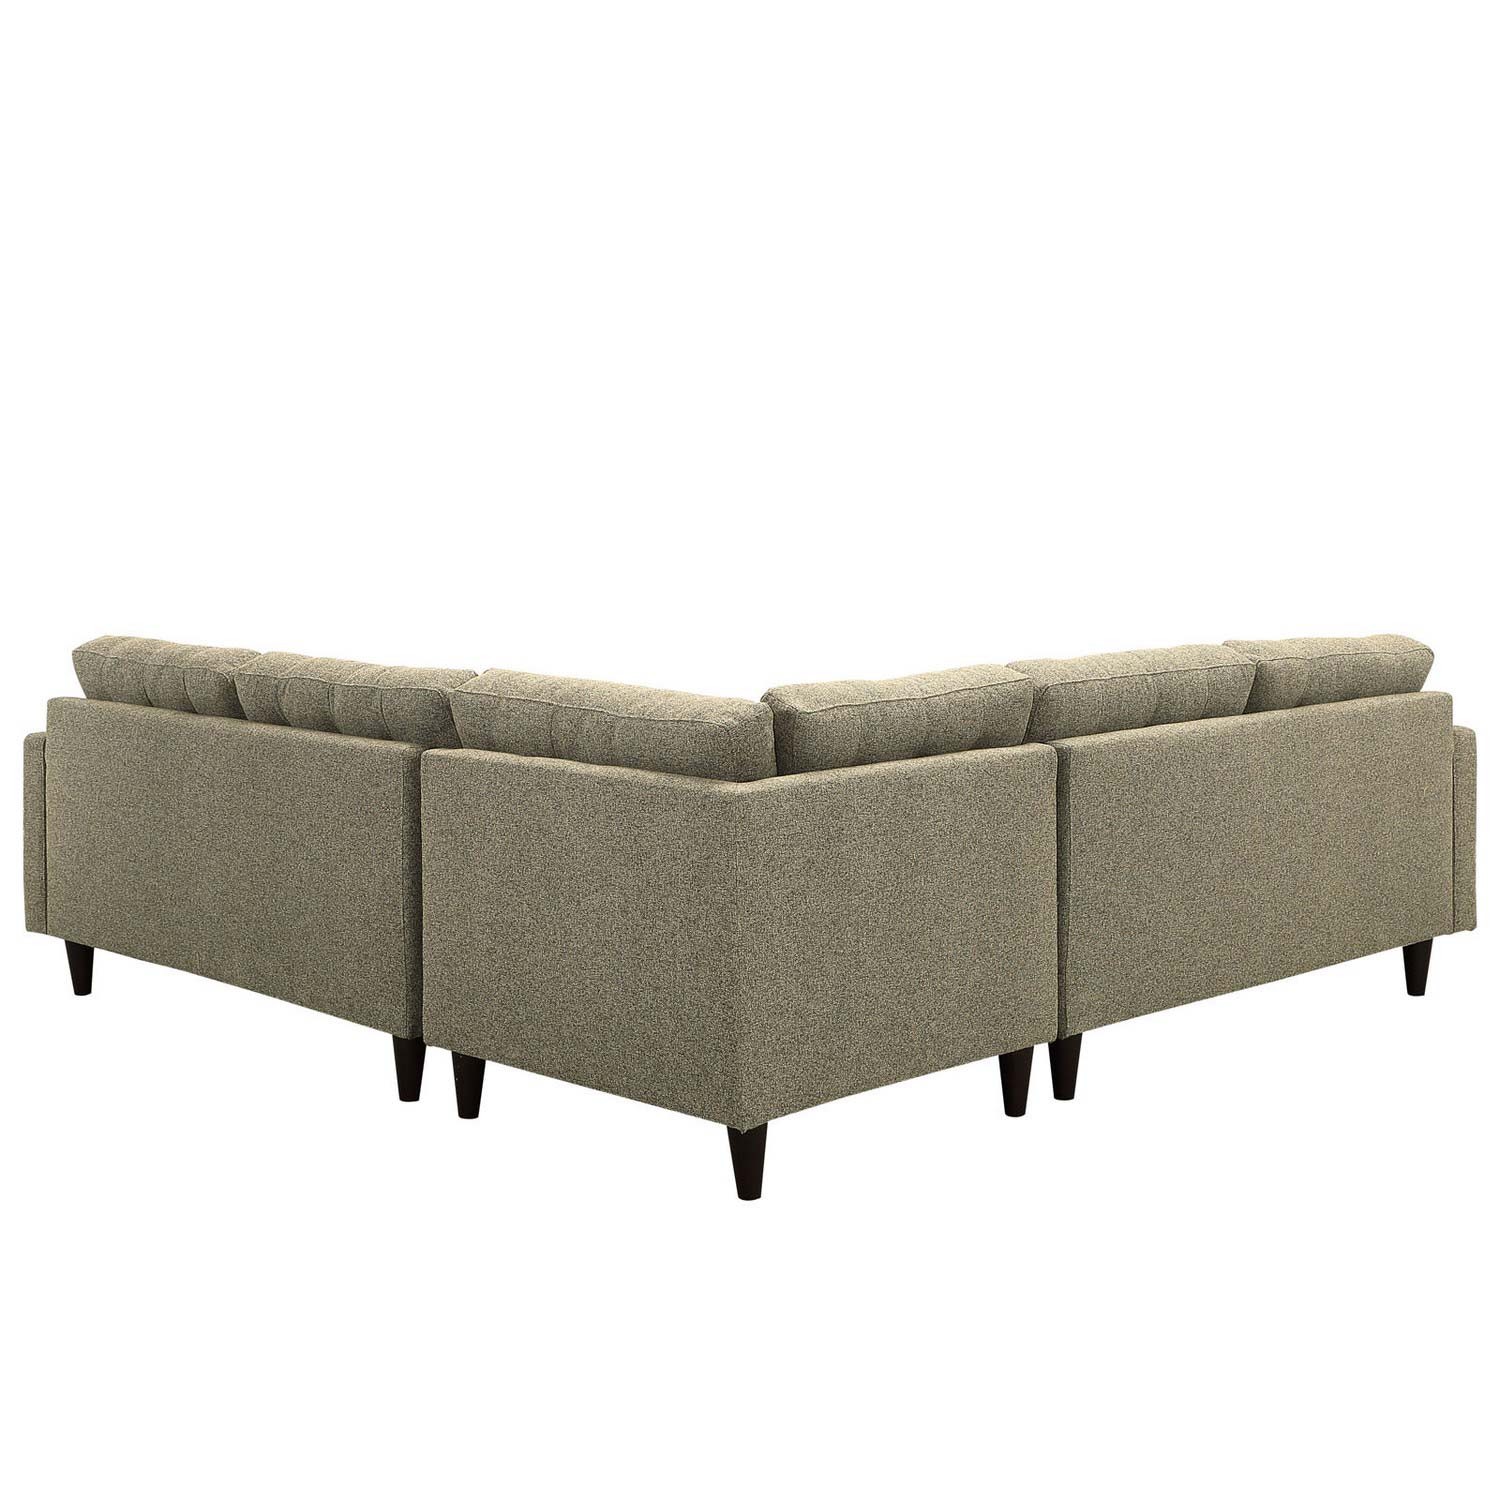 Modway Empress 3 Piece Fabric Sectional Sofa Set - Oatmeal